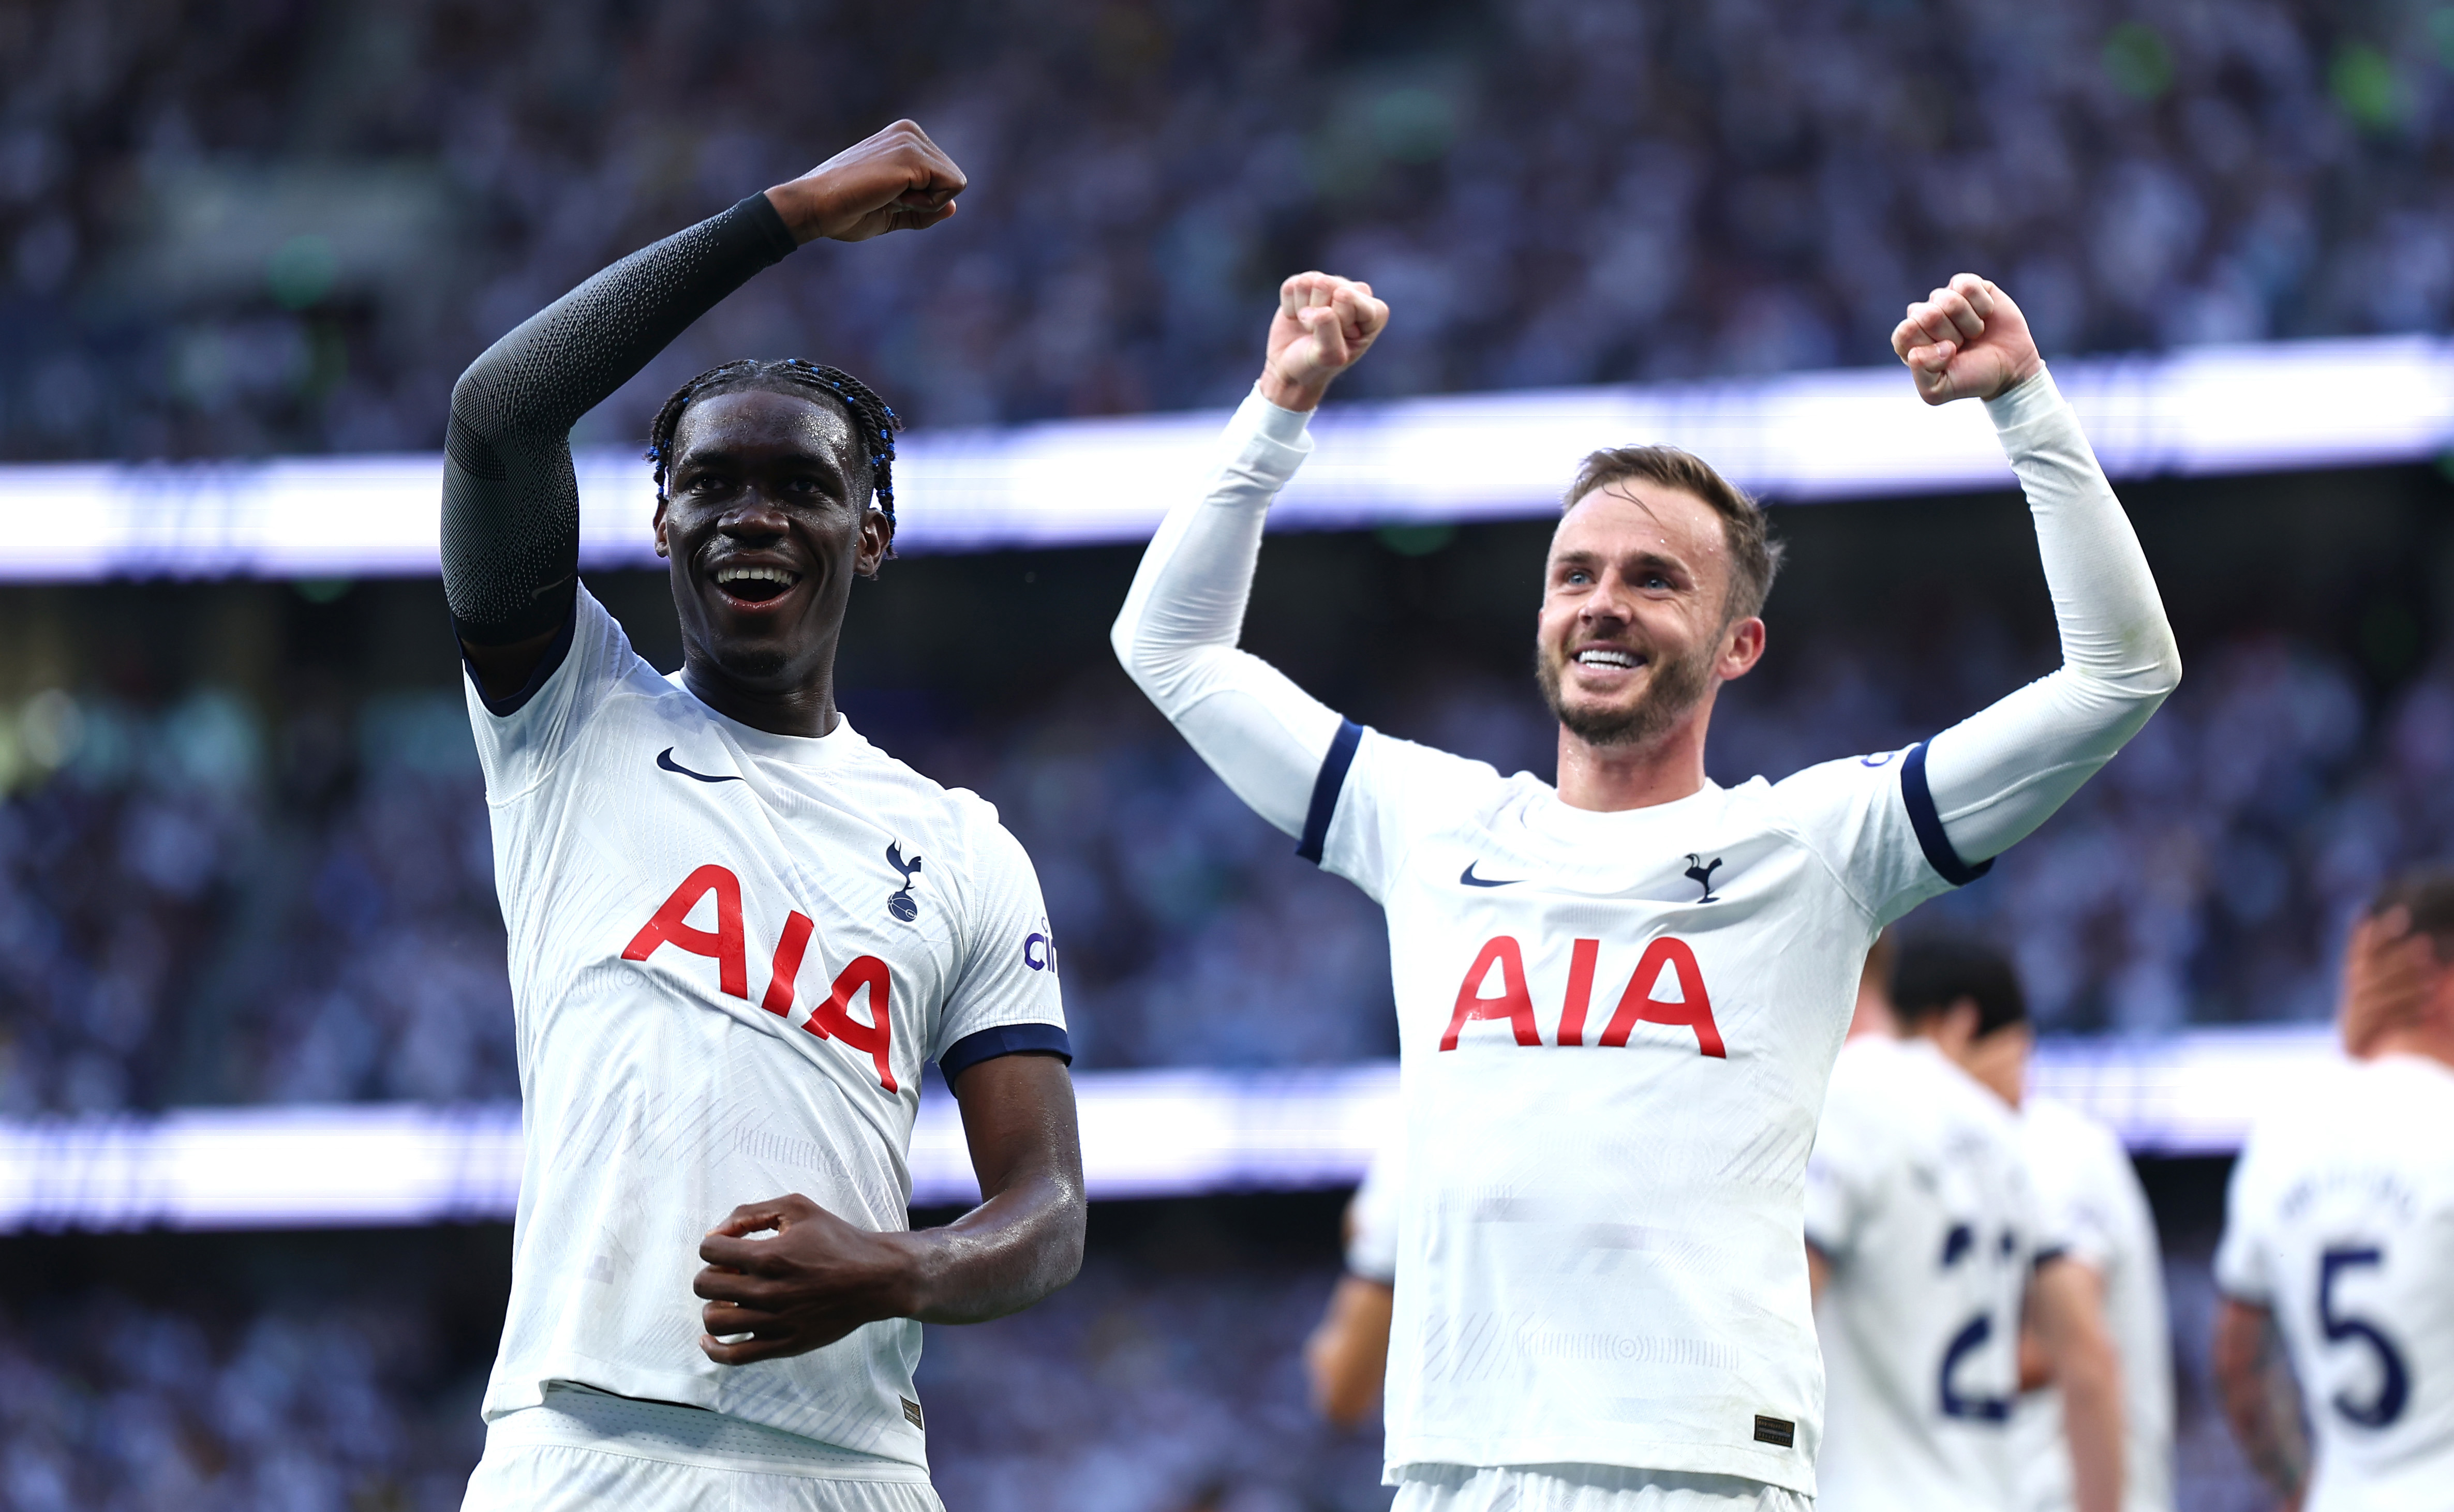 Guglielmo Vicario of Tottenham Hotspur celebrates after Dejan News Photo  - Getty Images